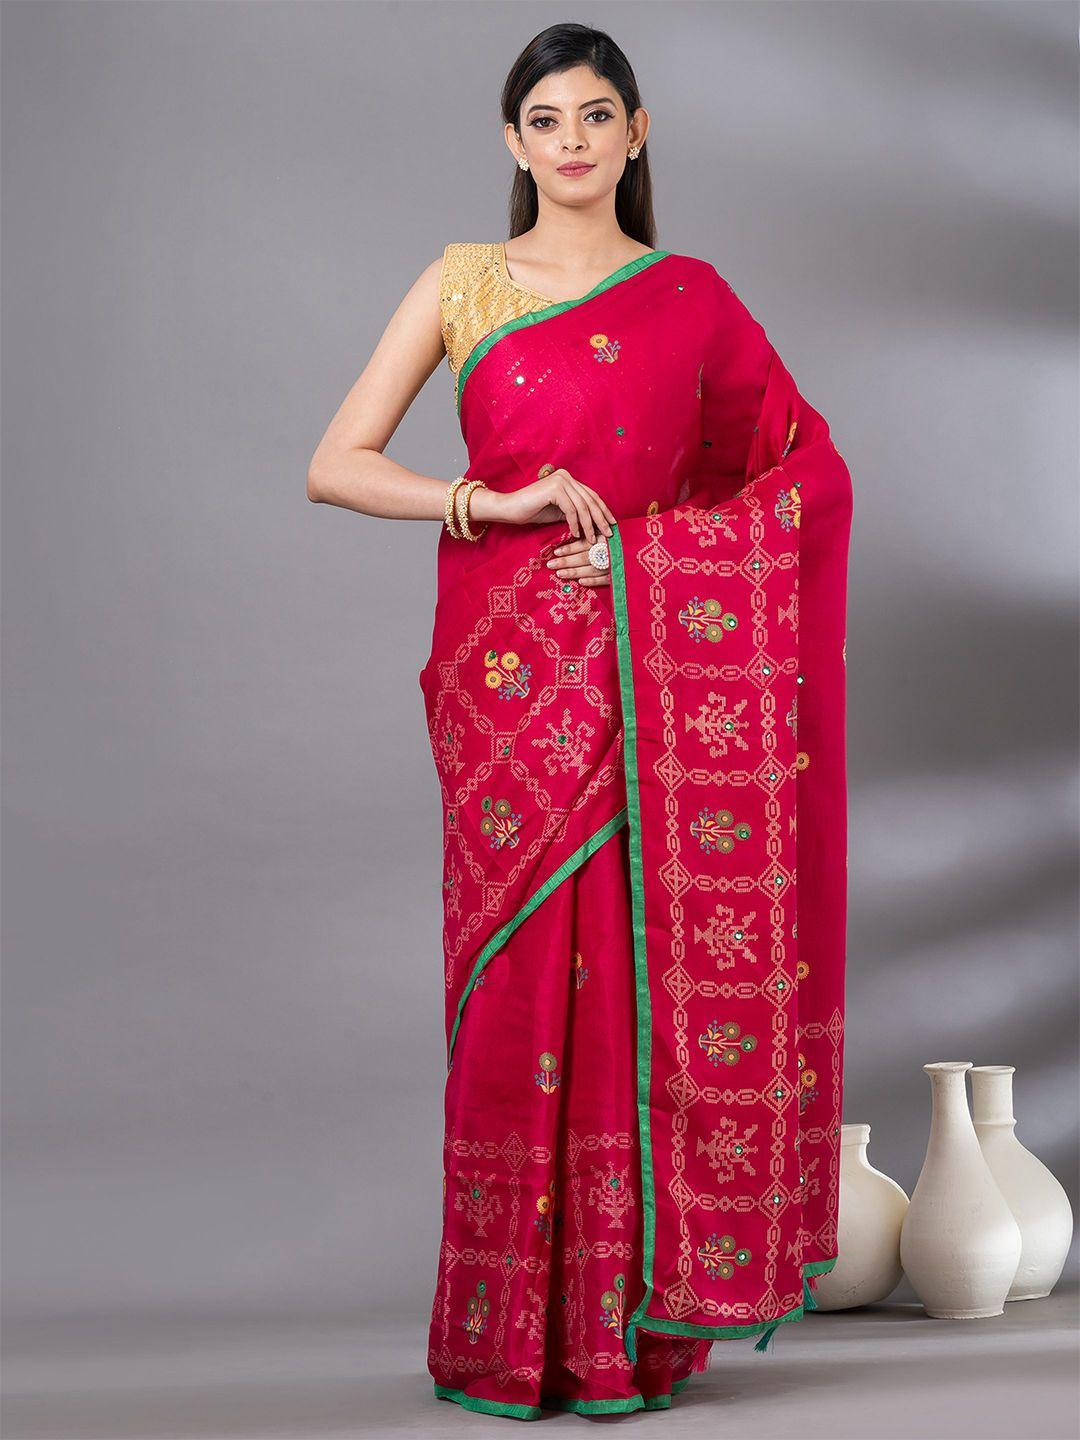 mahalasa maroon floral embroidered jute cotton saree